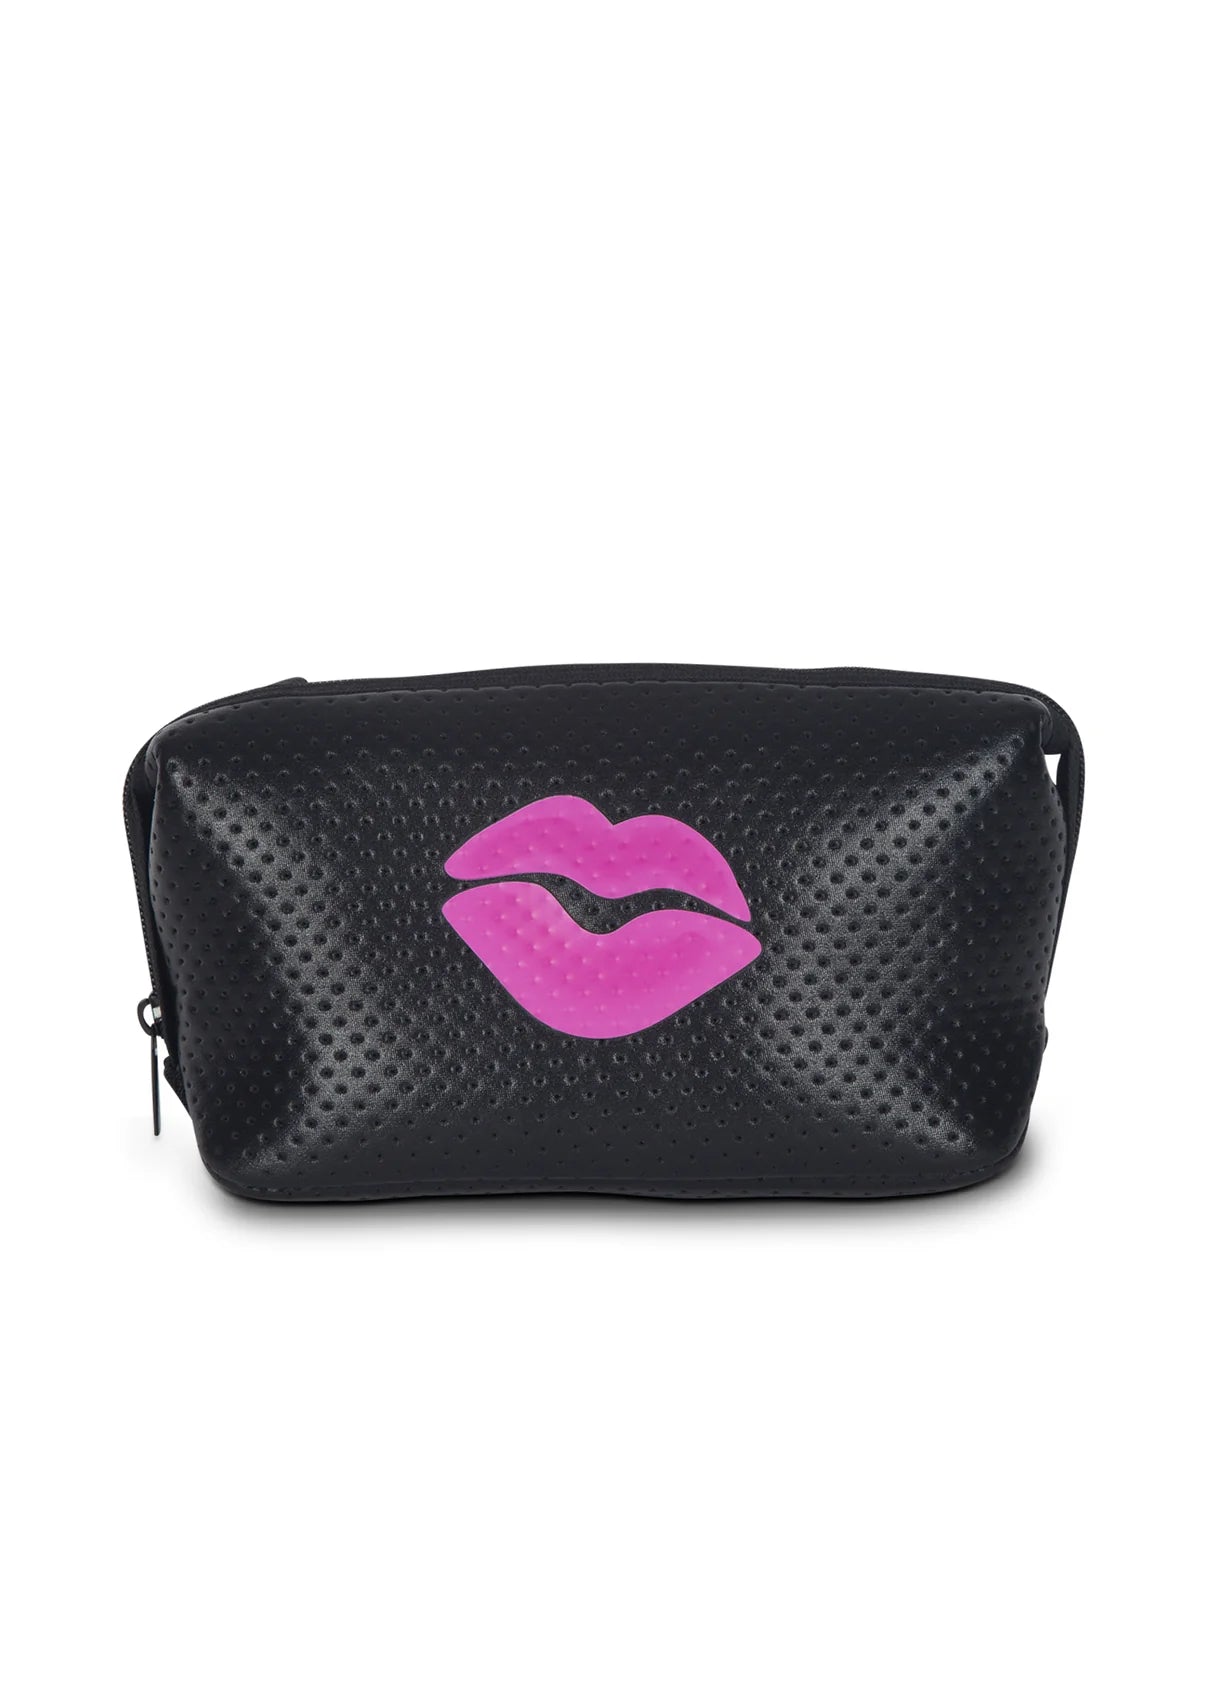 Haute Shore Erin Cosmetic Case Black Hot Pink Lips